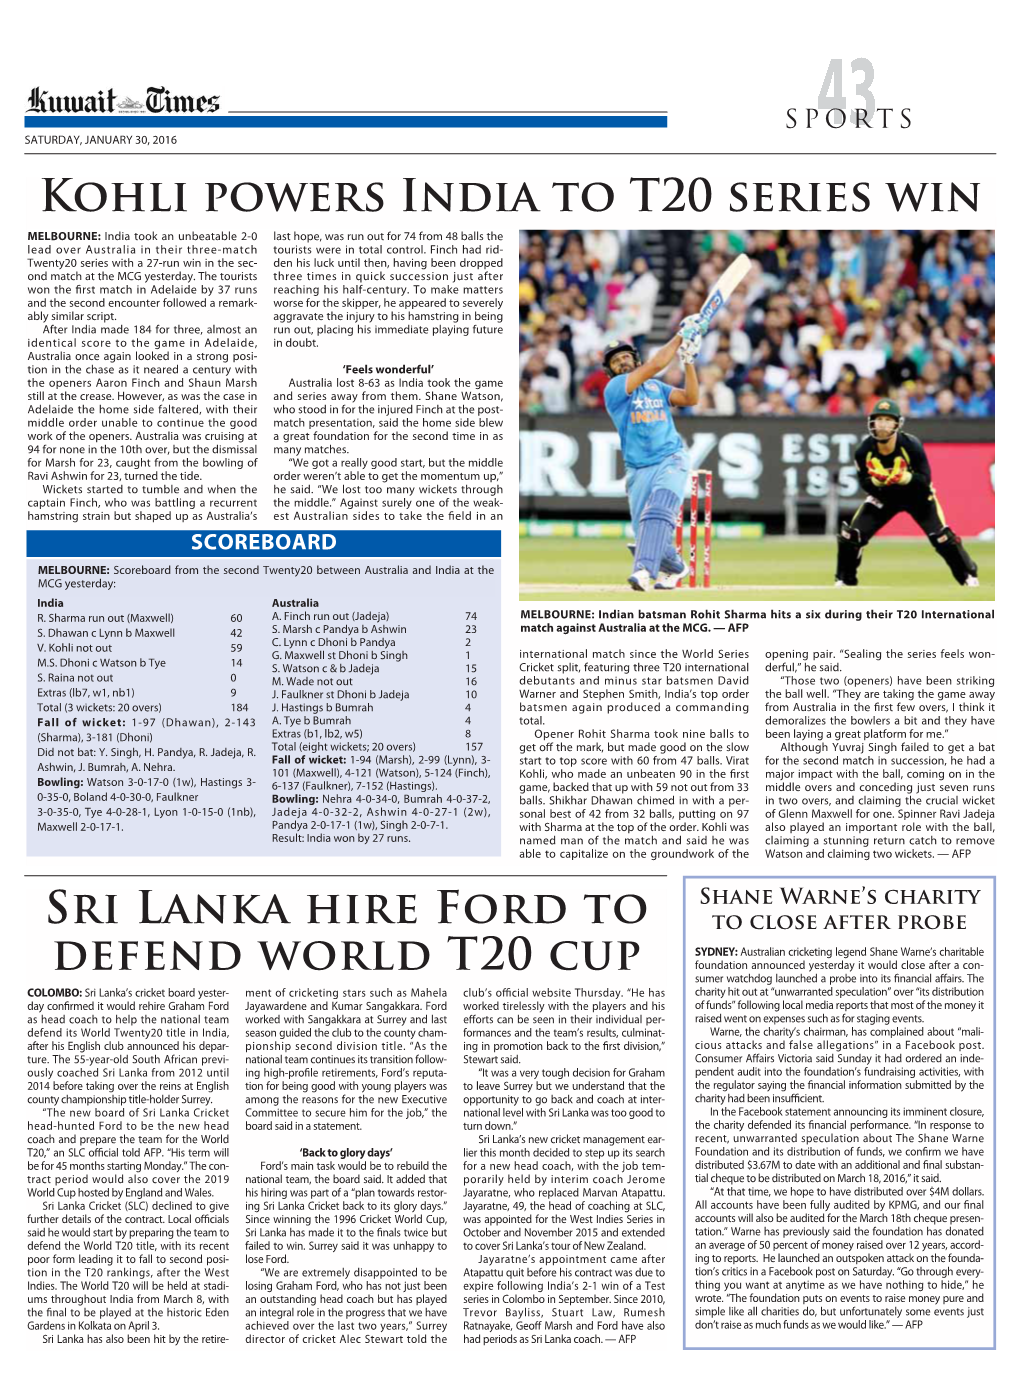 Kohli Powers India to T20 Series Win Sri Lanka Hire Ford to Defend World